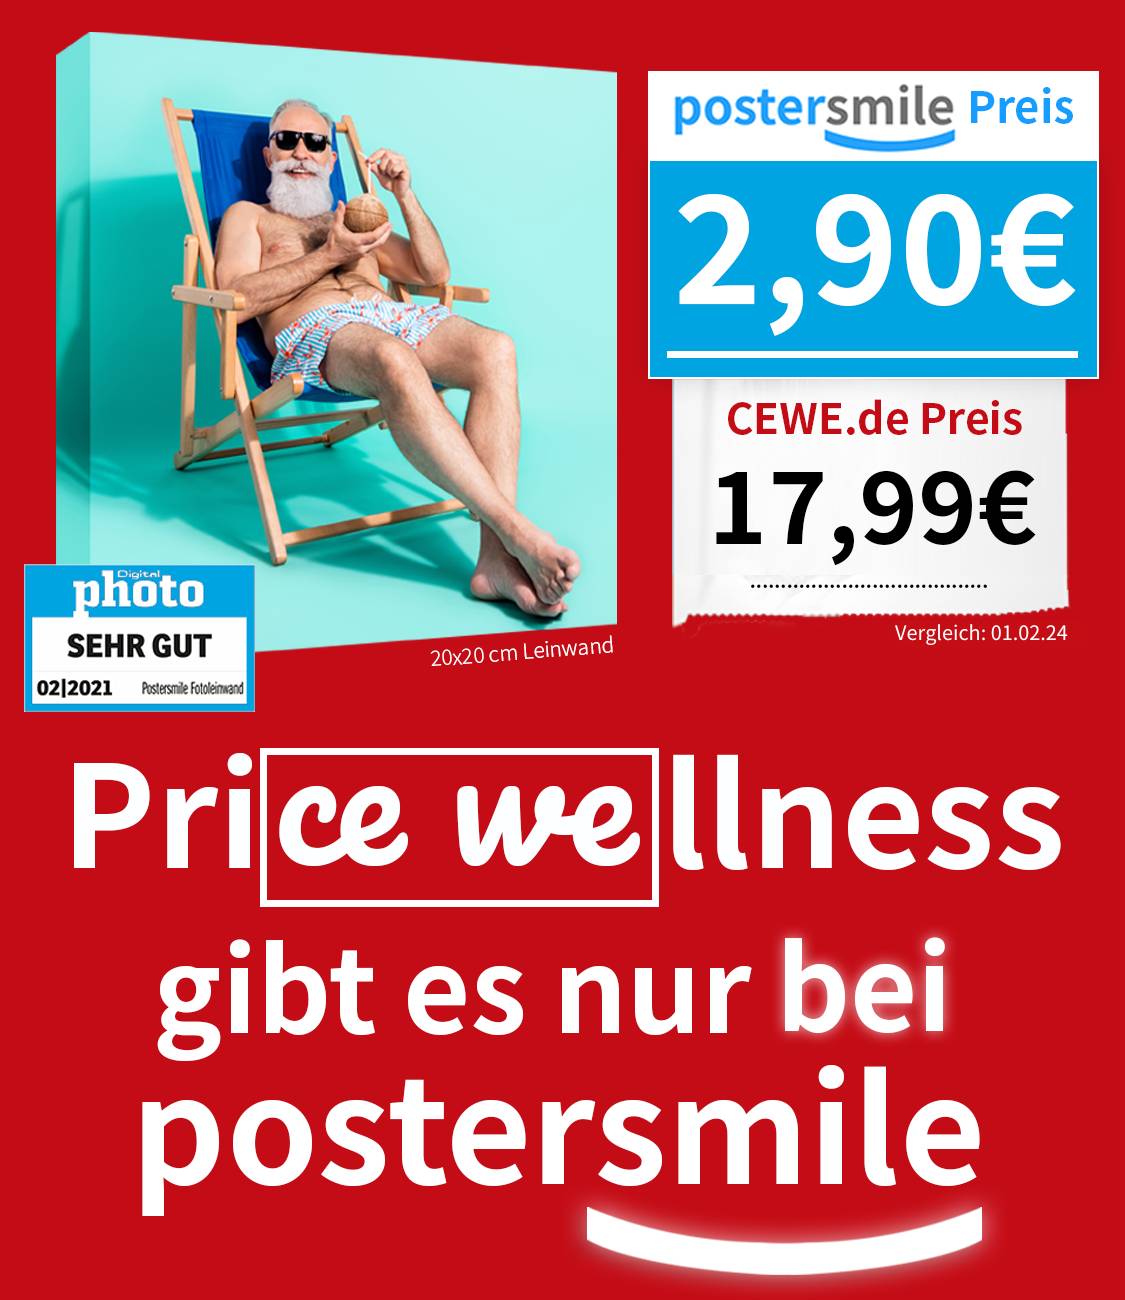 Fotoleinwand günstig - Foto auf Leinwand Preisvergleich postersmile.de vs. CEWE.de